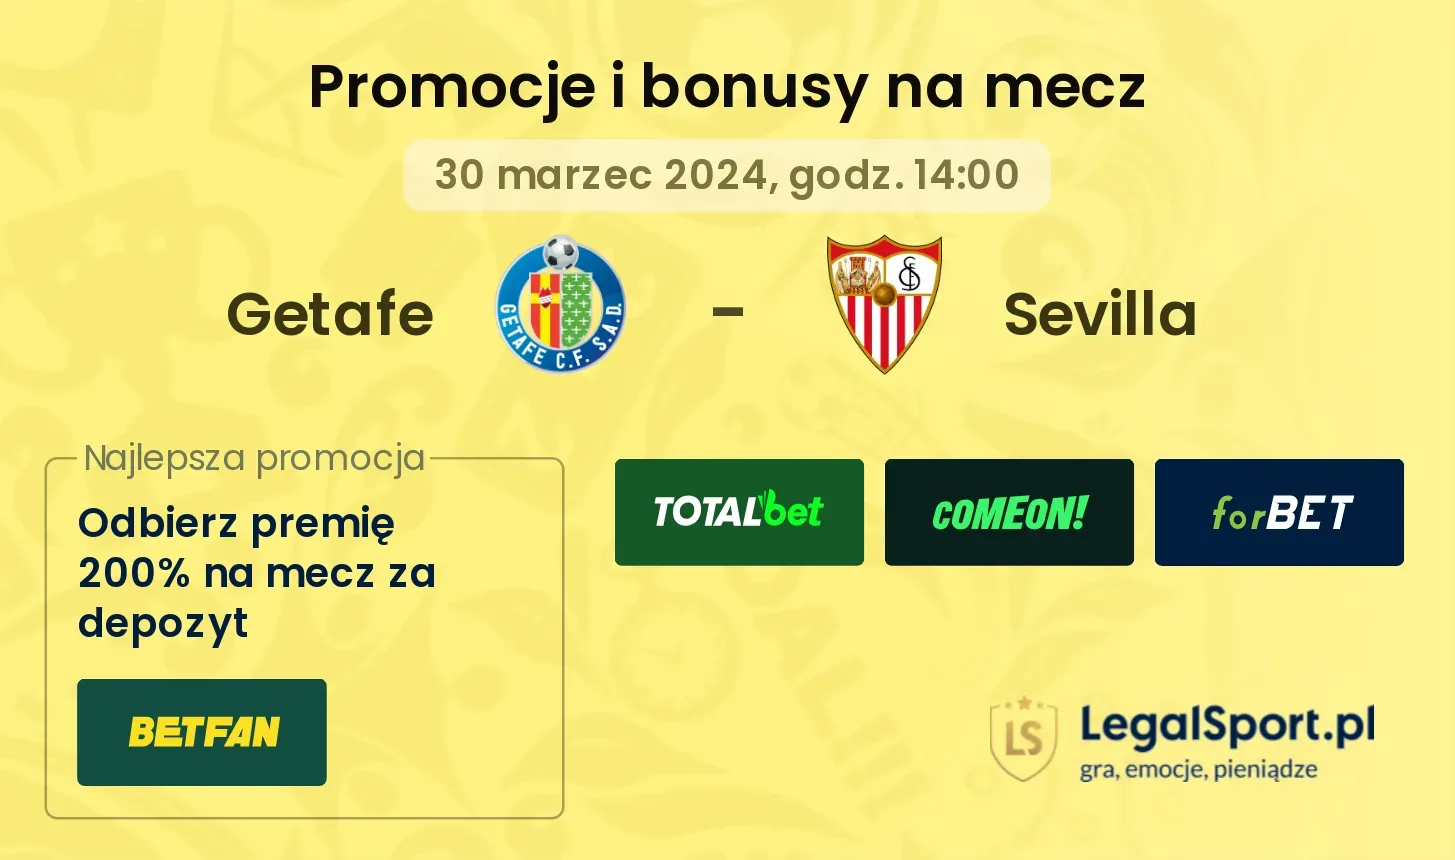 Getafe - Sevilla promocje bonusy na mecz